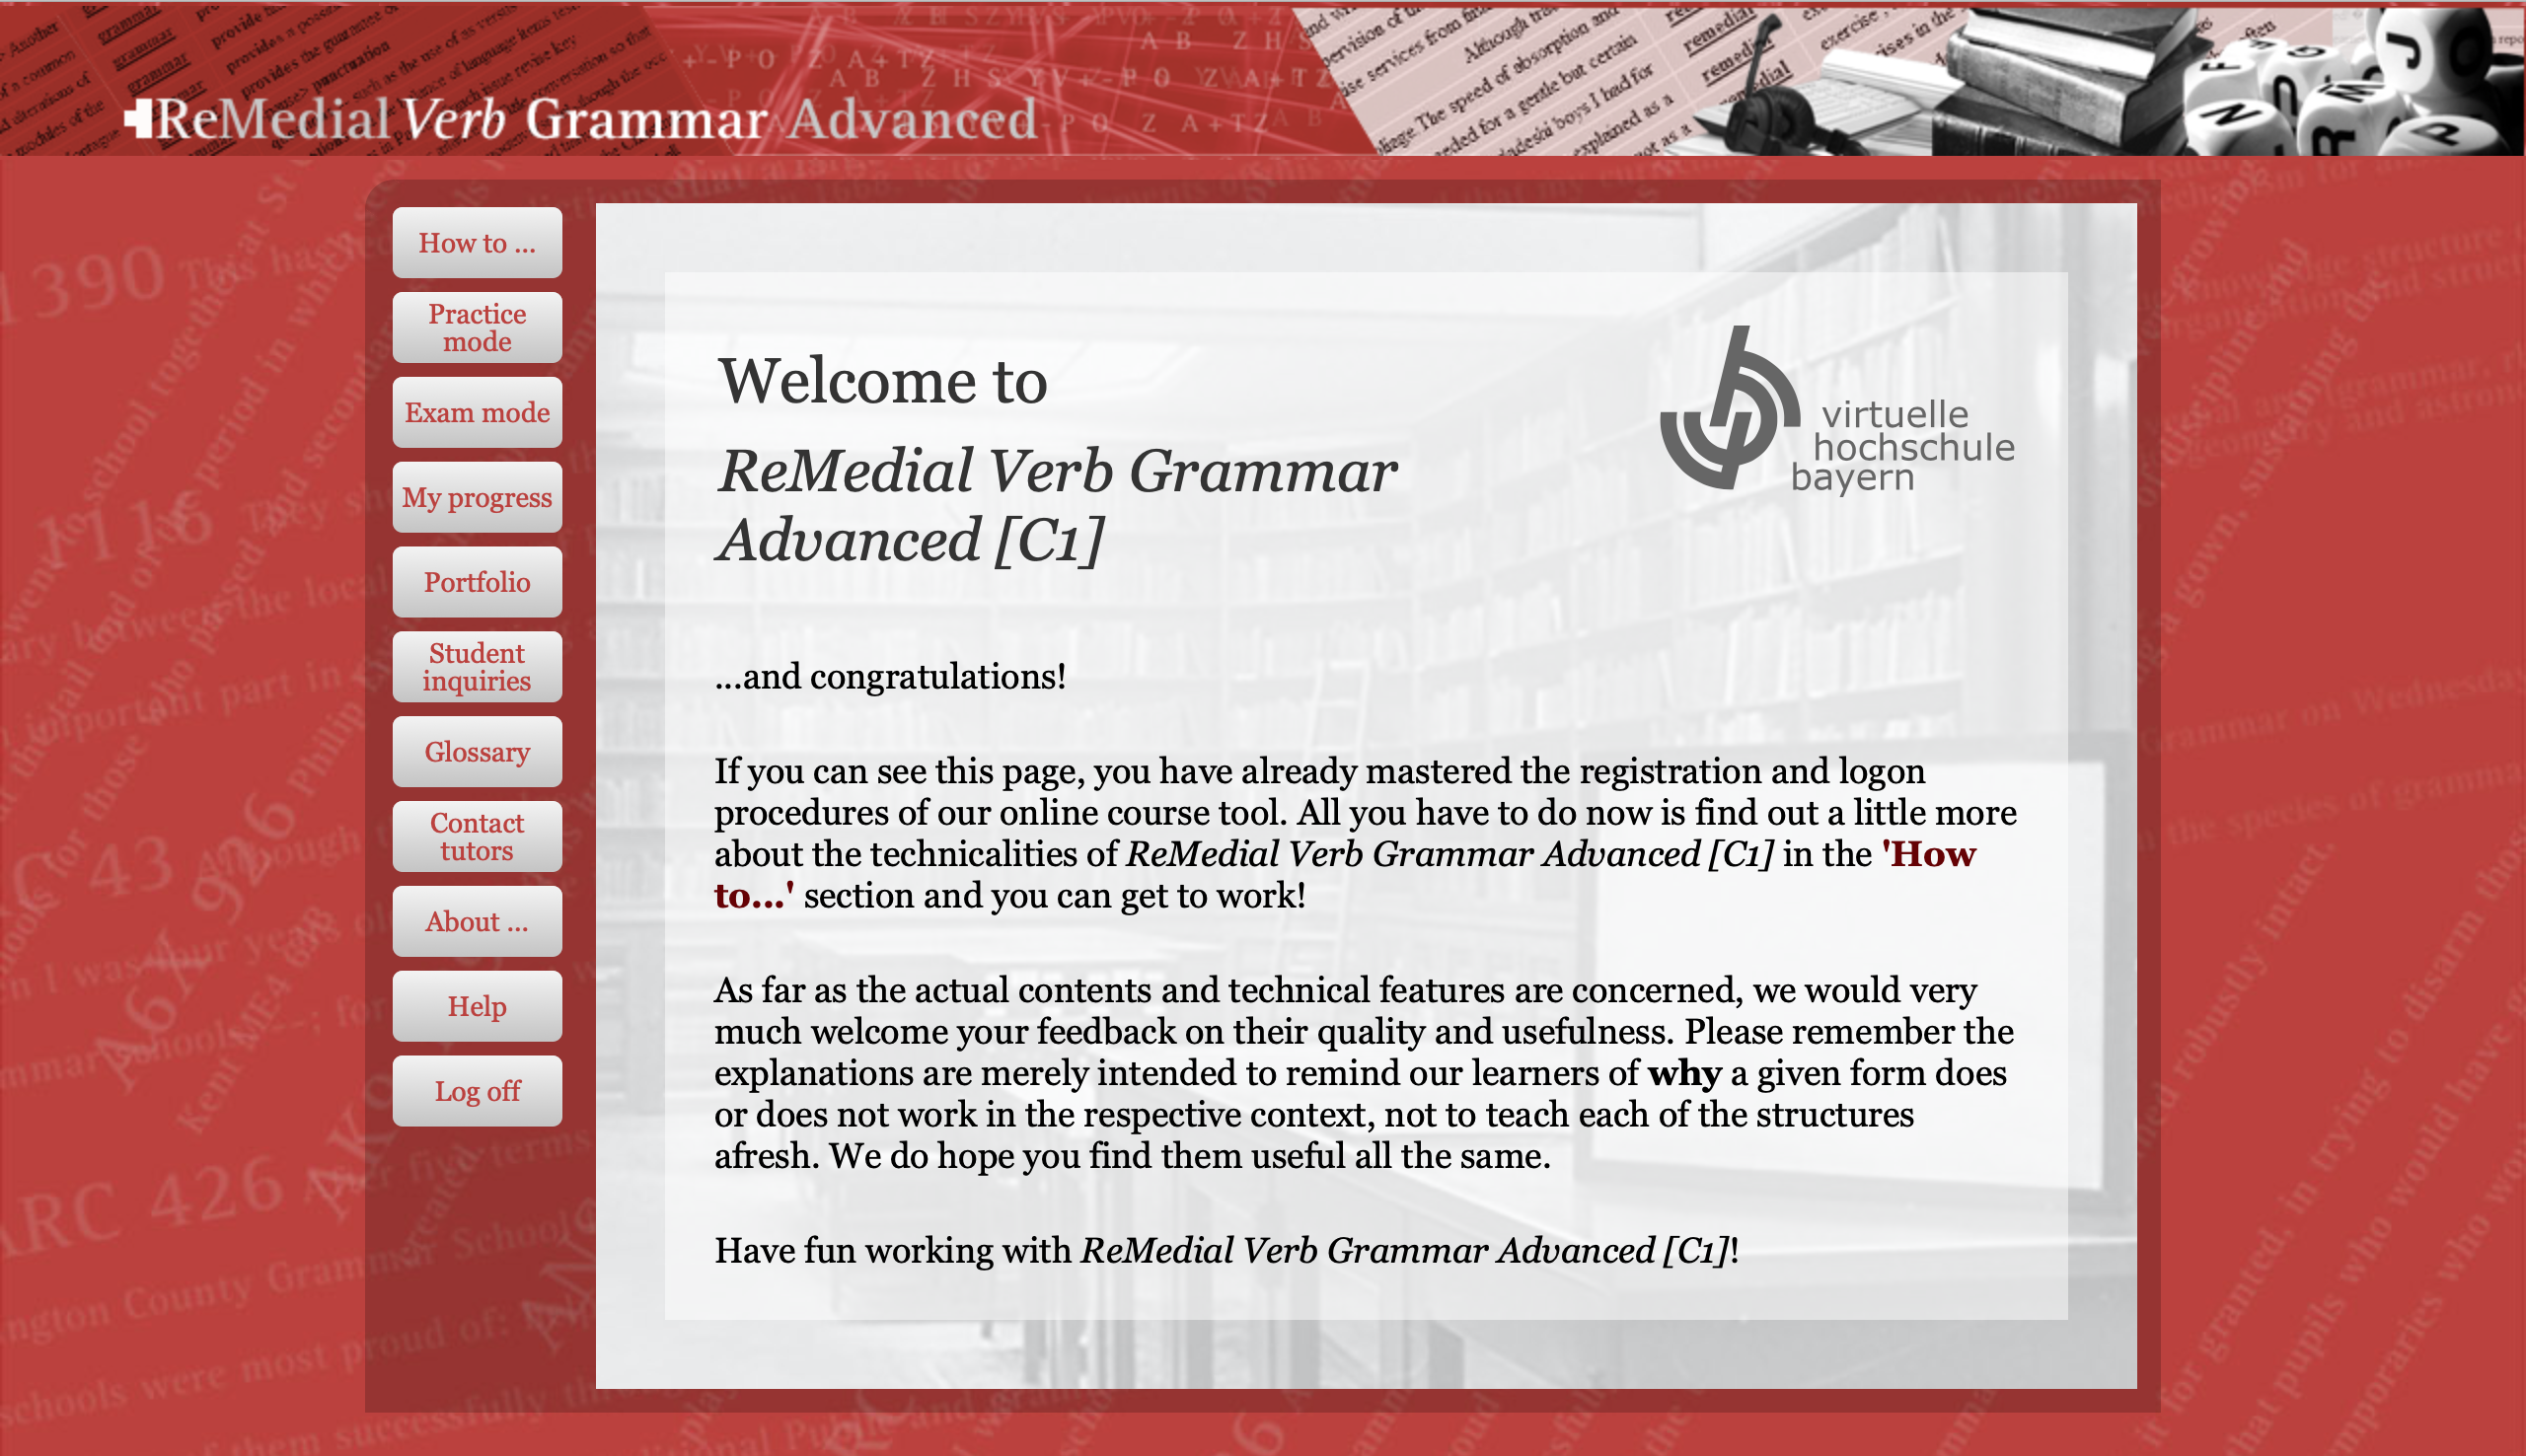 Hauptseite des Kurses "Remedial Verb Grammar Advanced"